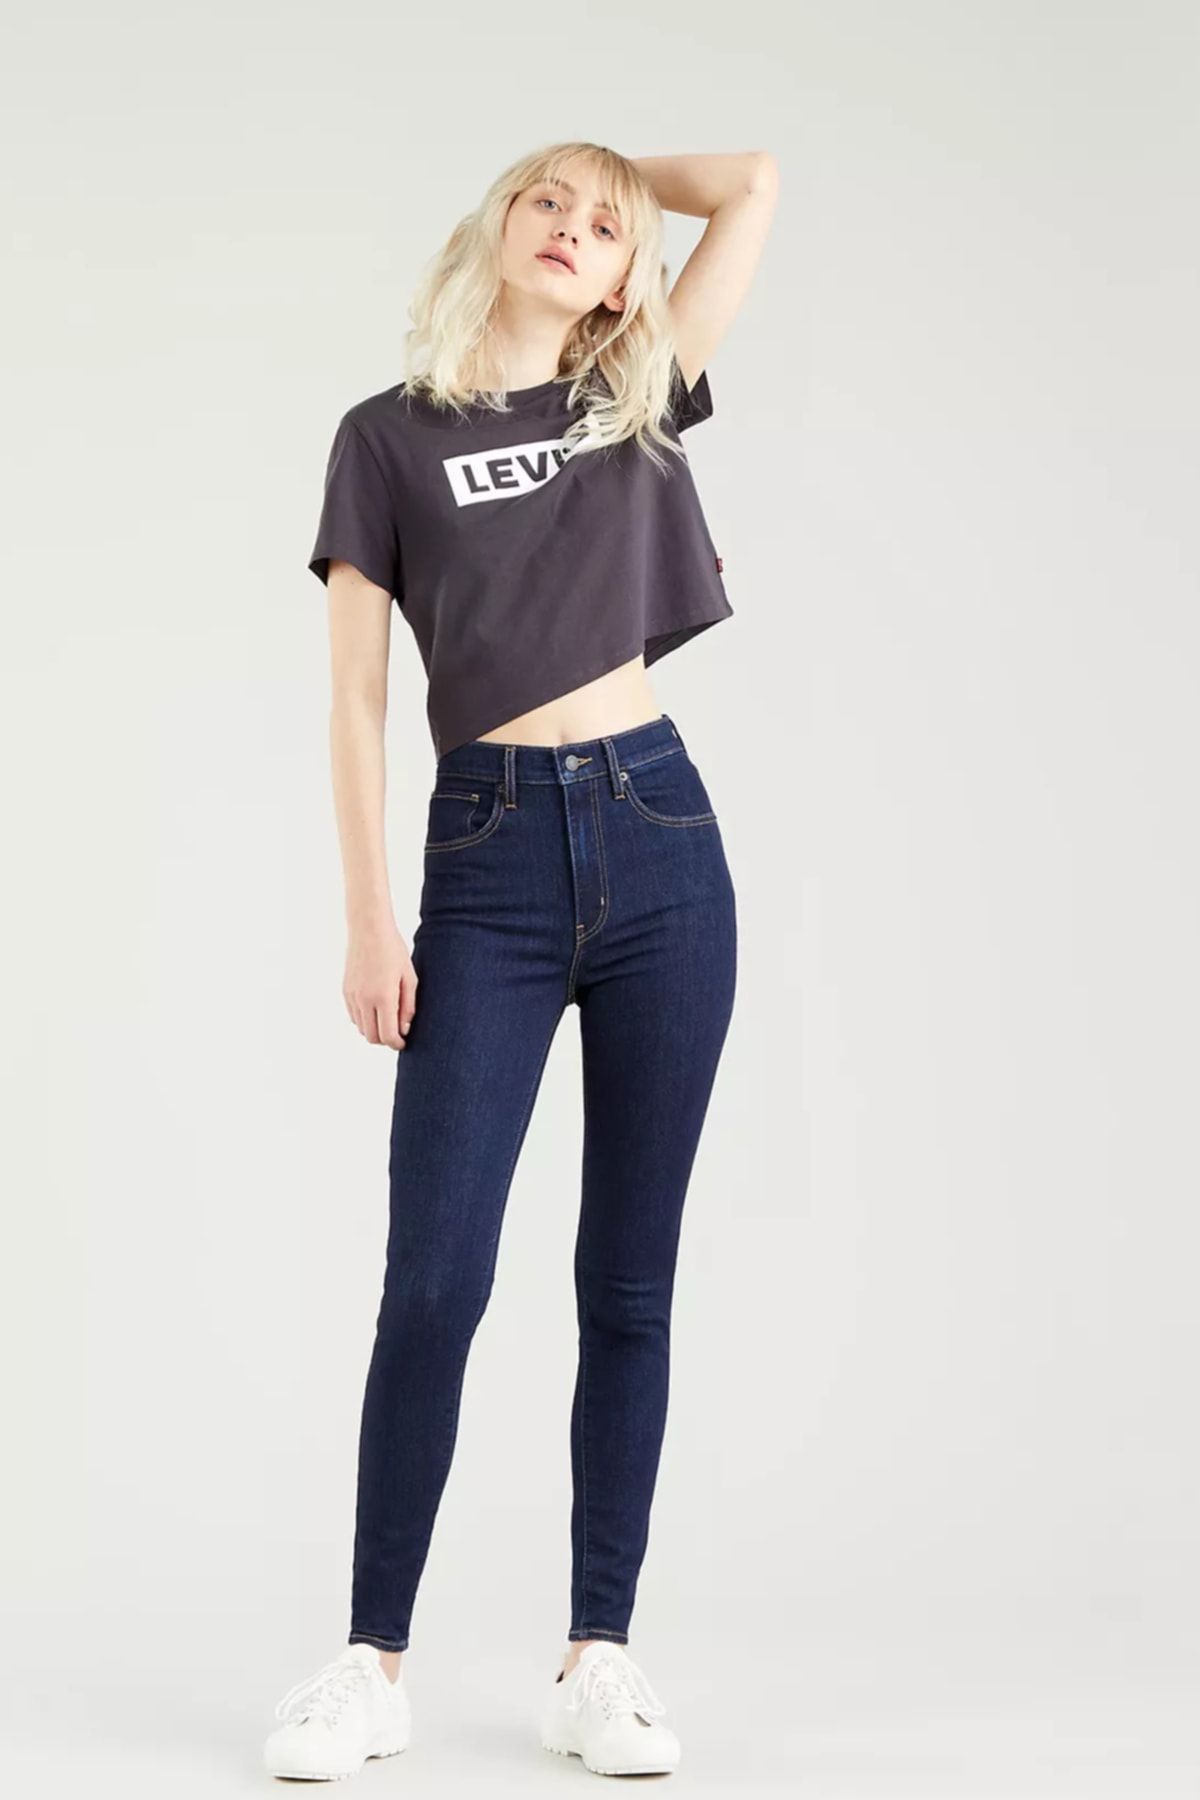 Levi's Pamuklu Yüksek Bel Super Skinny Mile High Jeans Kadın Kot Pantolon 22791